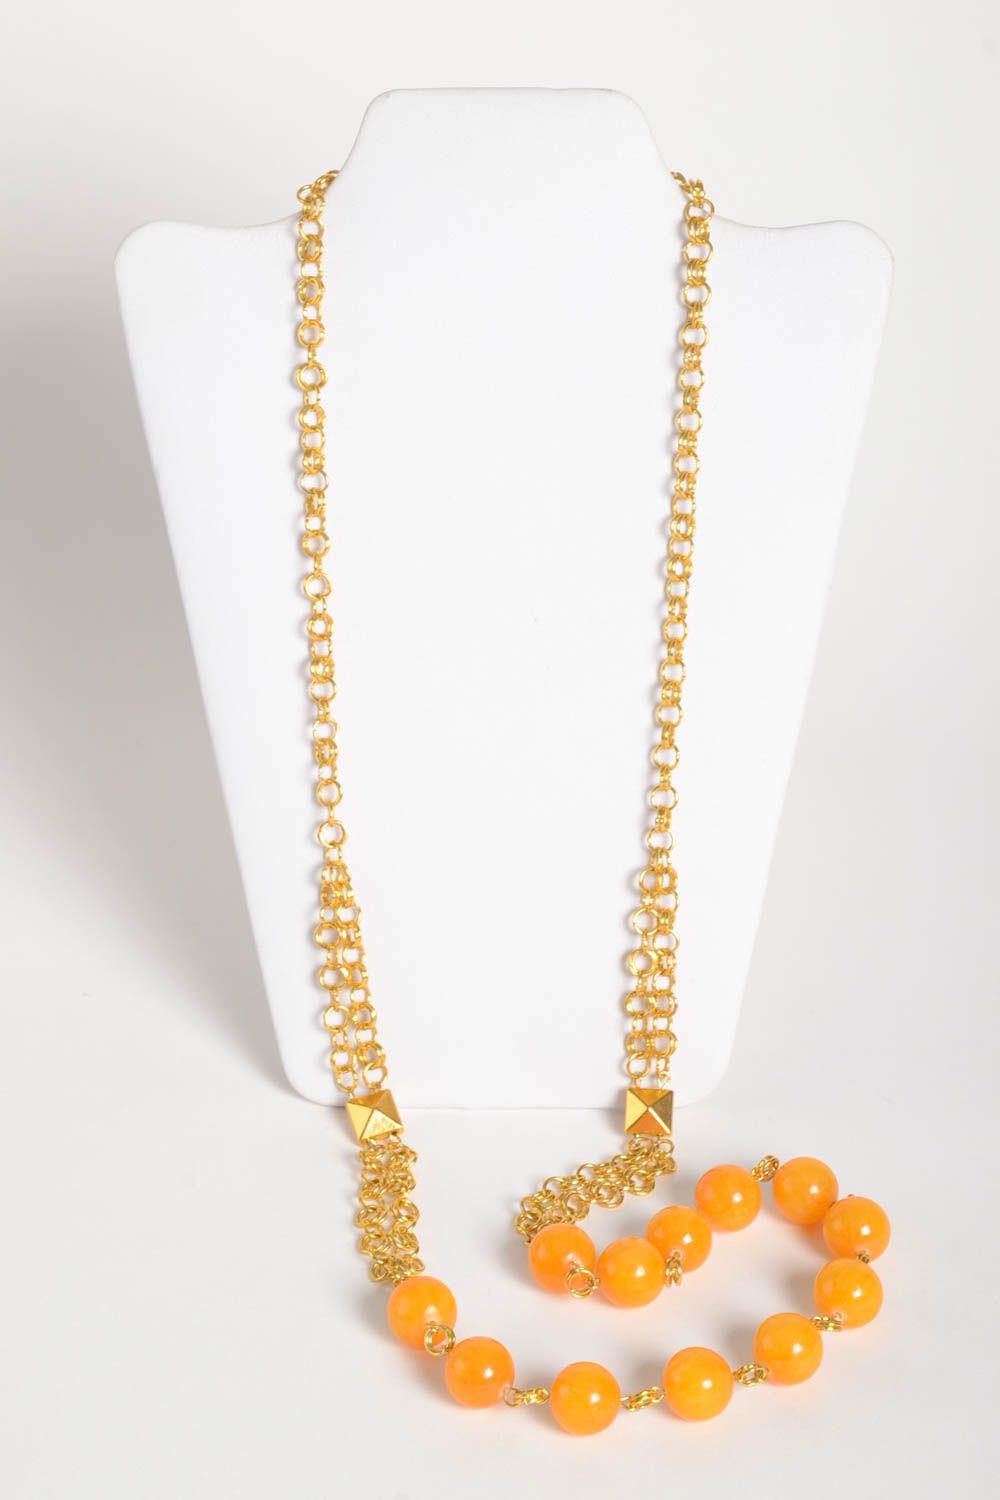 Handmade beaded necklace gemstone bead necklace beautiful jewellery gift ideas photo 3